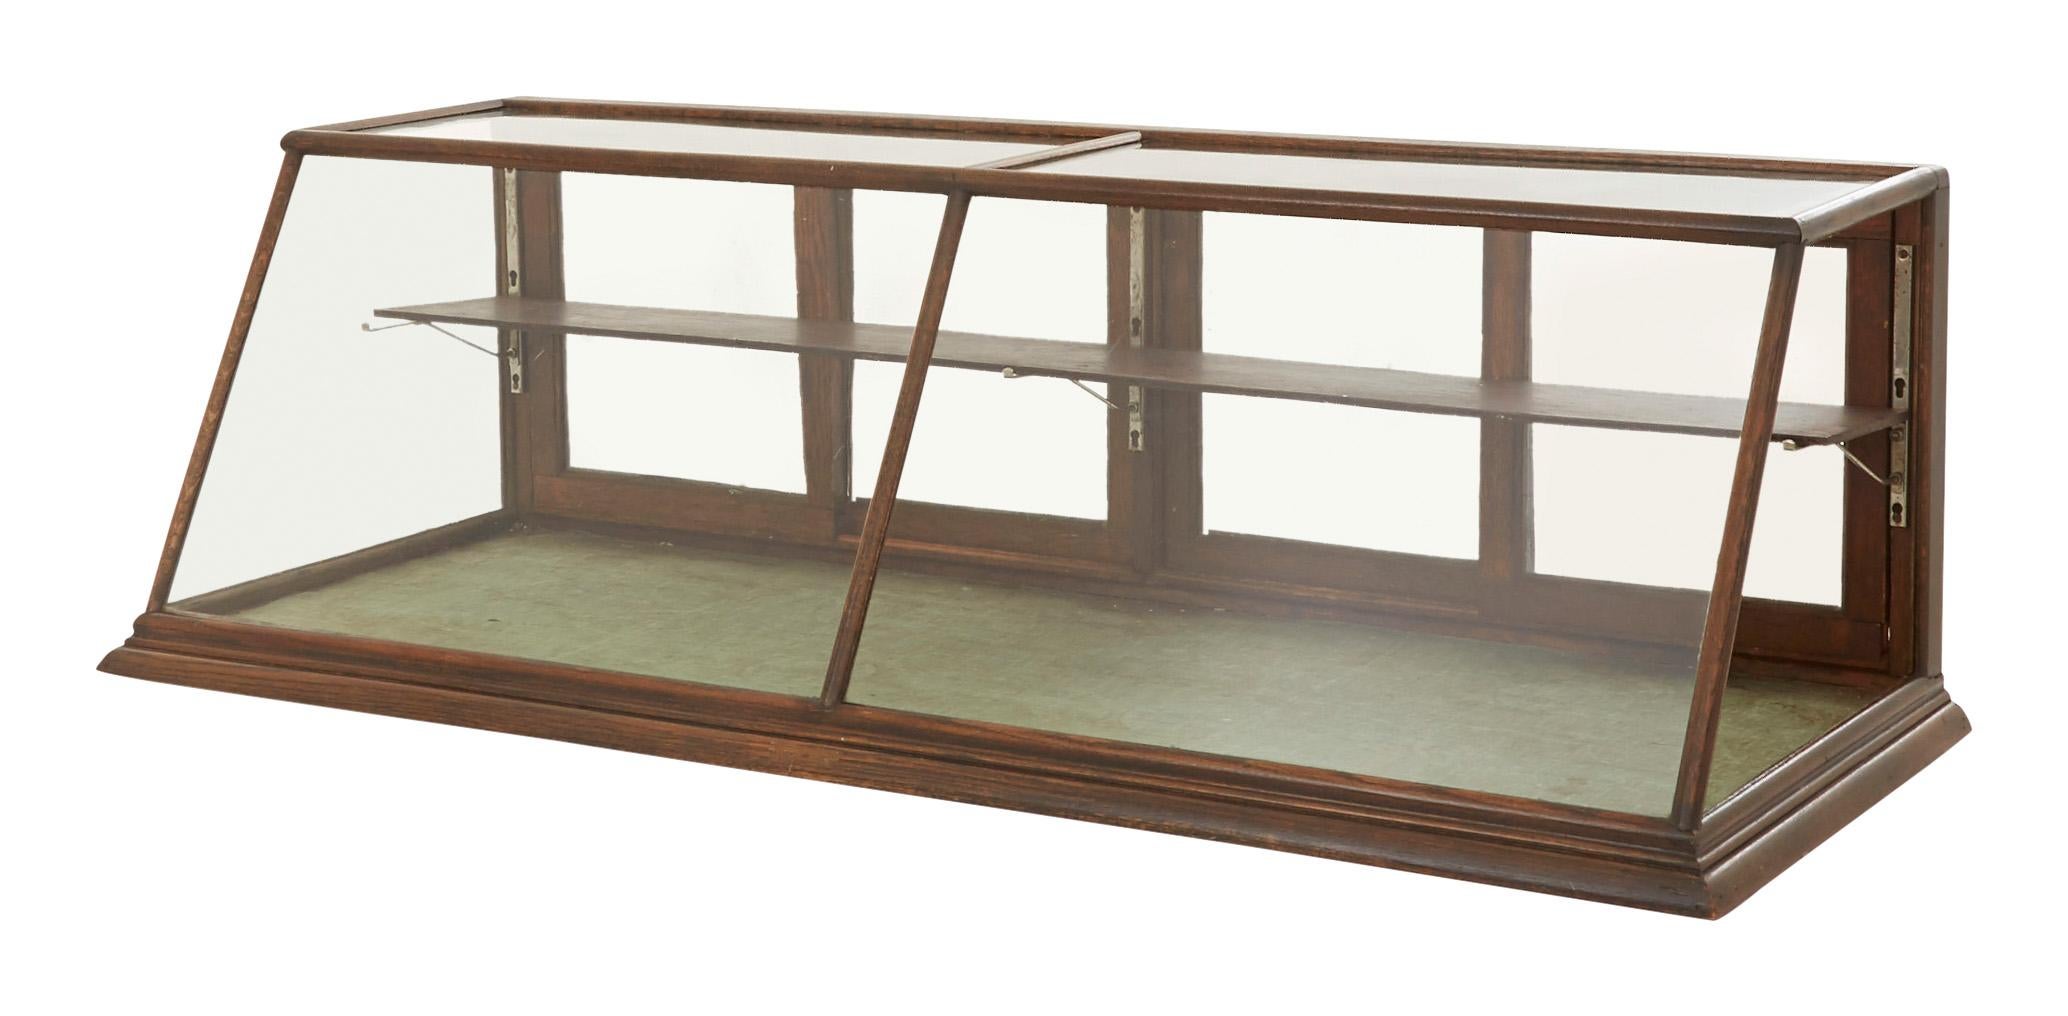 • Vintage mercantile tabletop display case
• Oak
• Glass sliding doors
• Wood shelf with adjustable brackets,
• Early 20th century,
• American
• Measures: 71